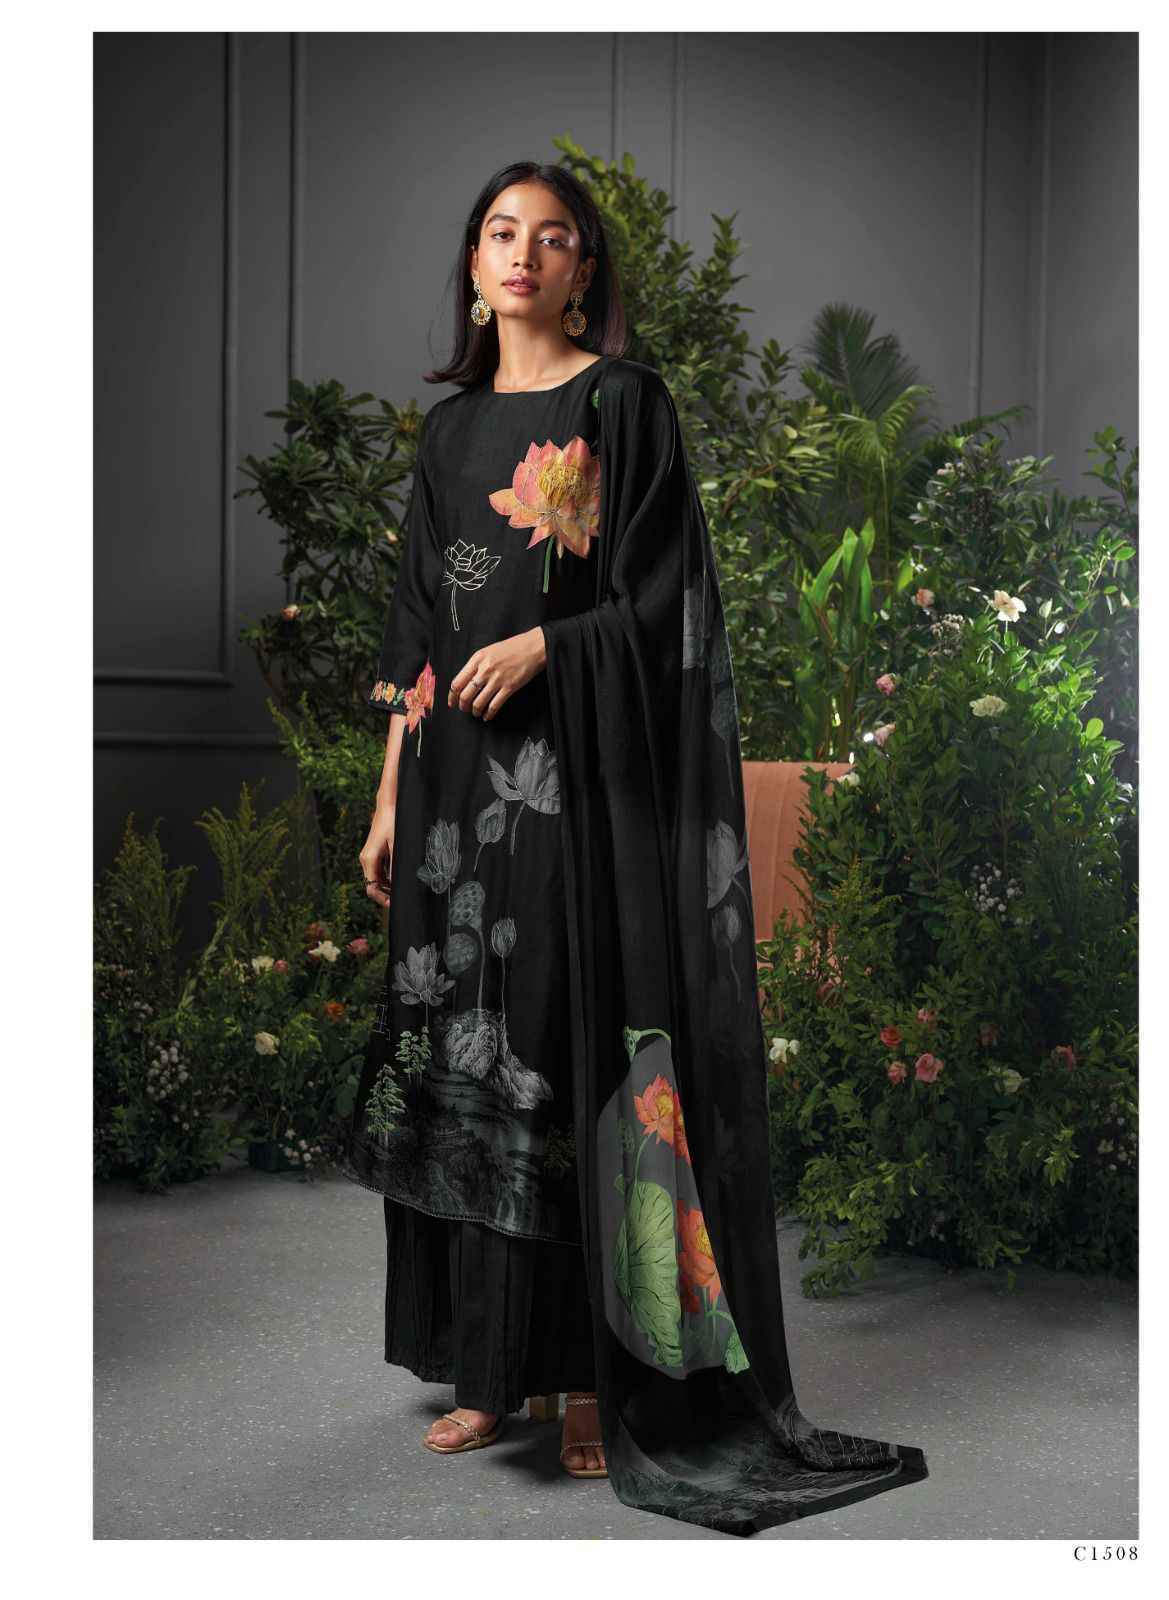 Ganga Eshaal Russian Silk Dress Material Wholesale Factory Price